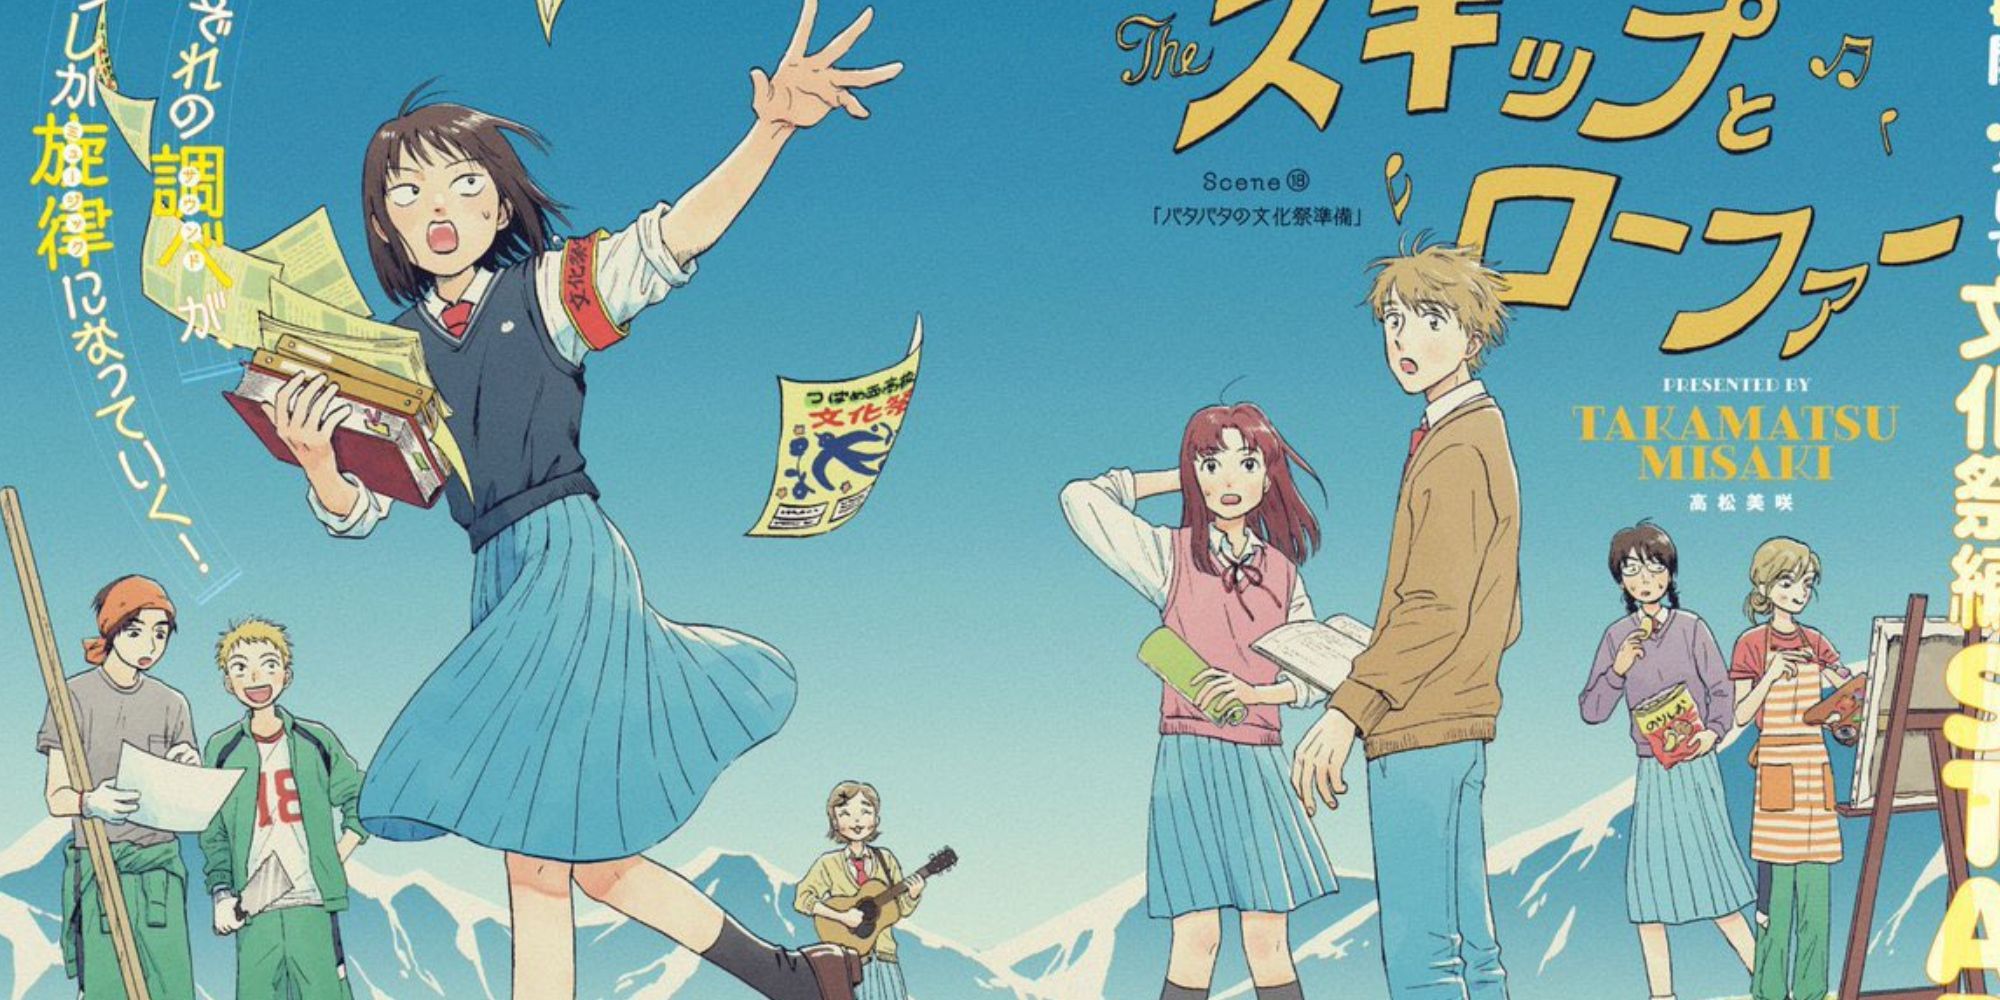 Skip & Loafer Anime Announces April 2023 Premiere